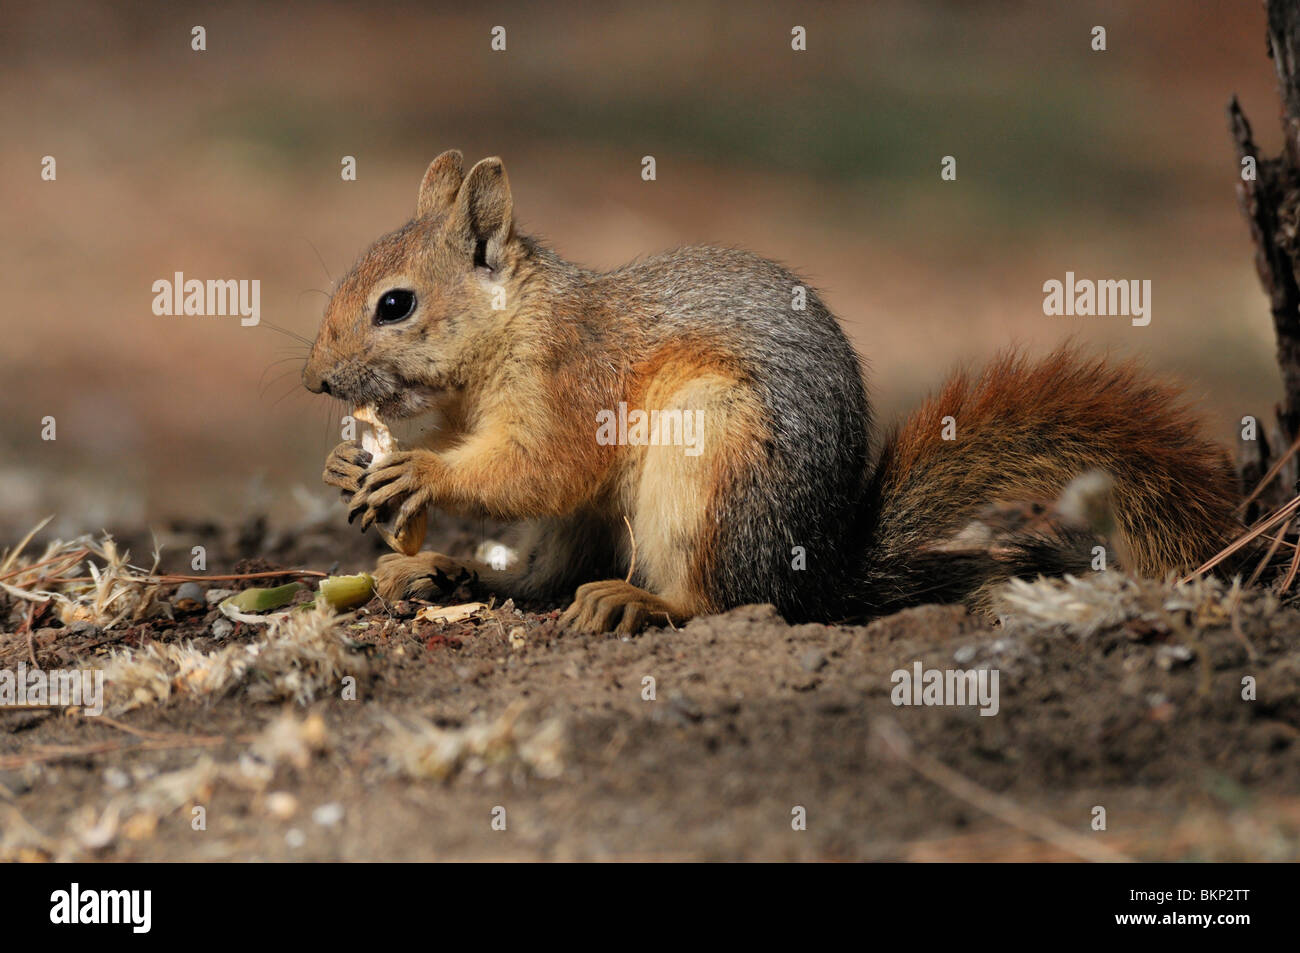 kaukasuseekhoorn een eikel etend; persian squirrel eating  an acorn Stock Photo